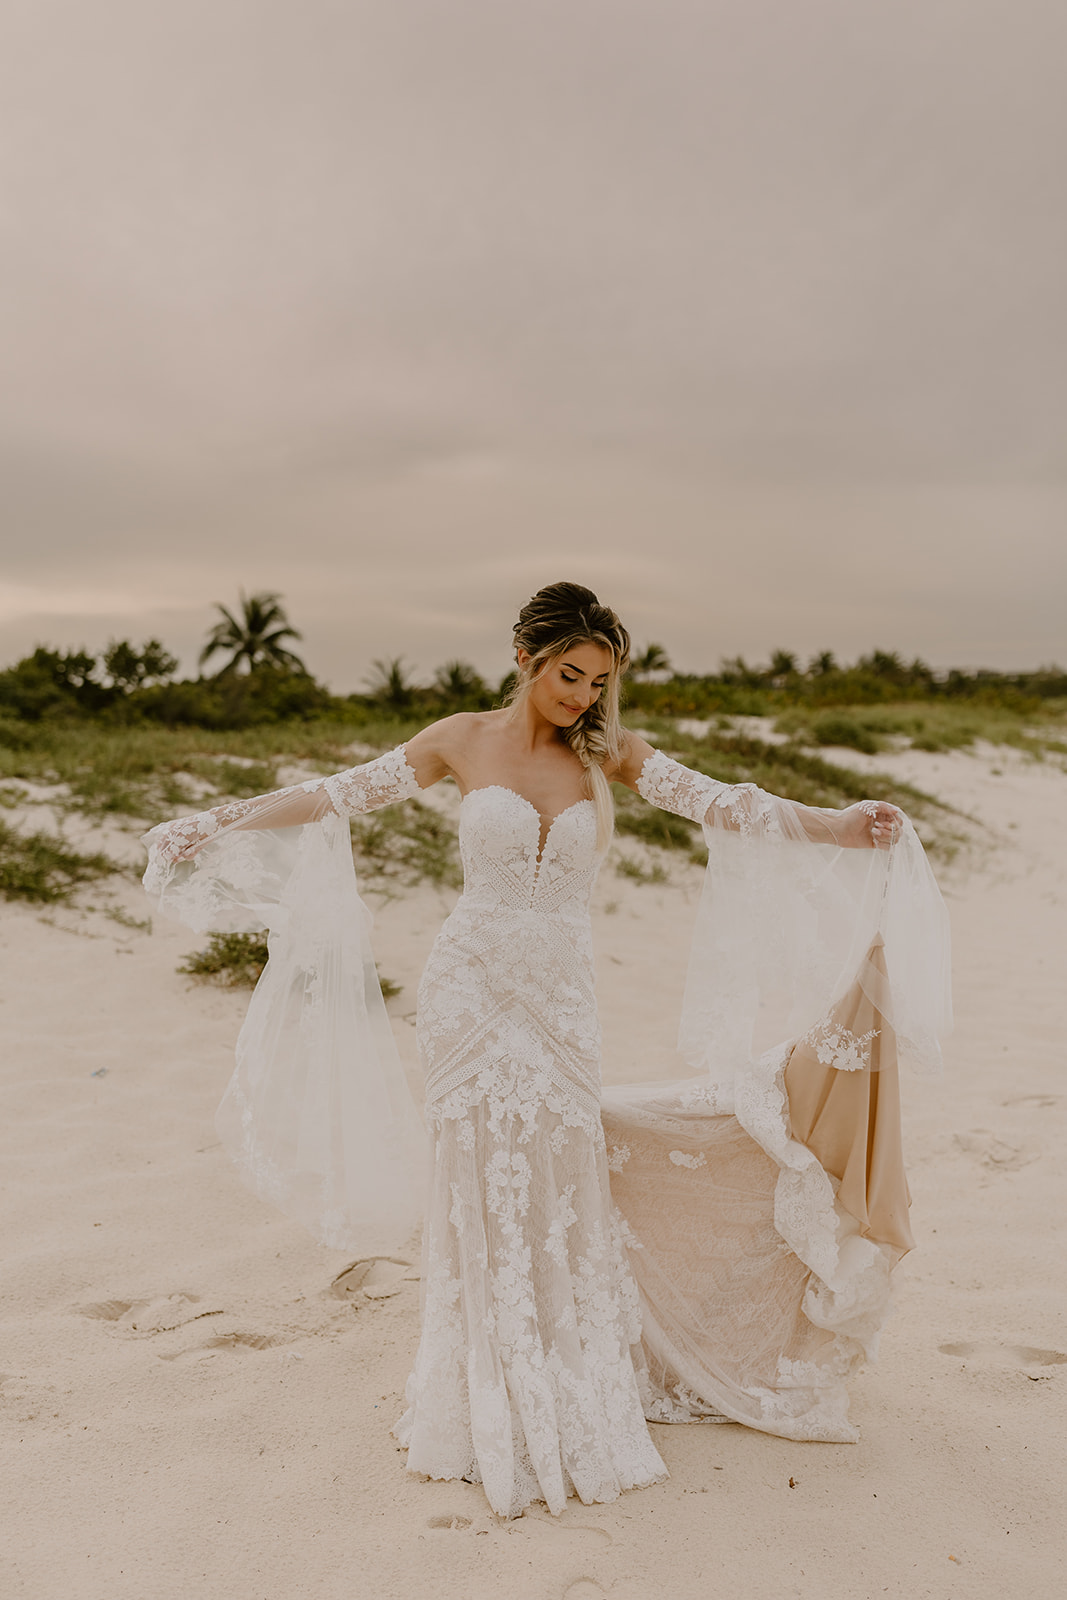 Boho Finest Playa Mujeres wedding photos near Cancun Mexico. 